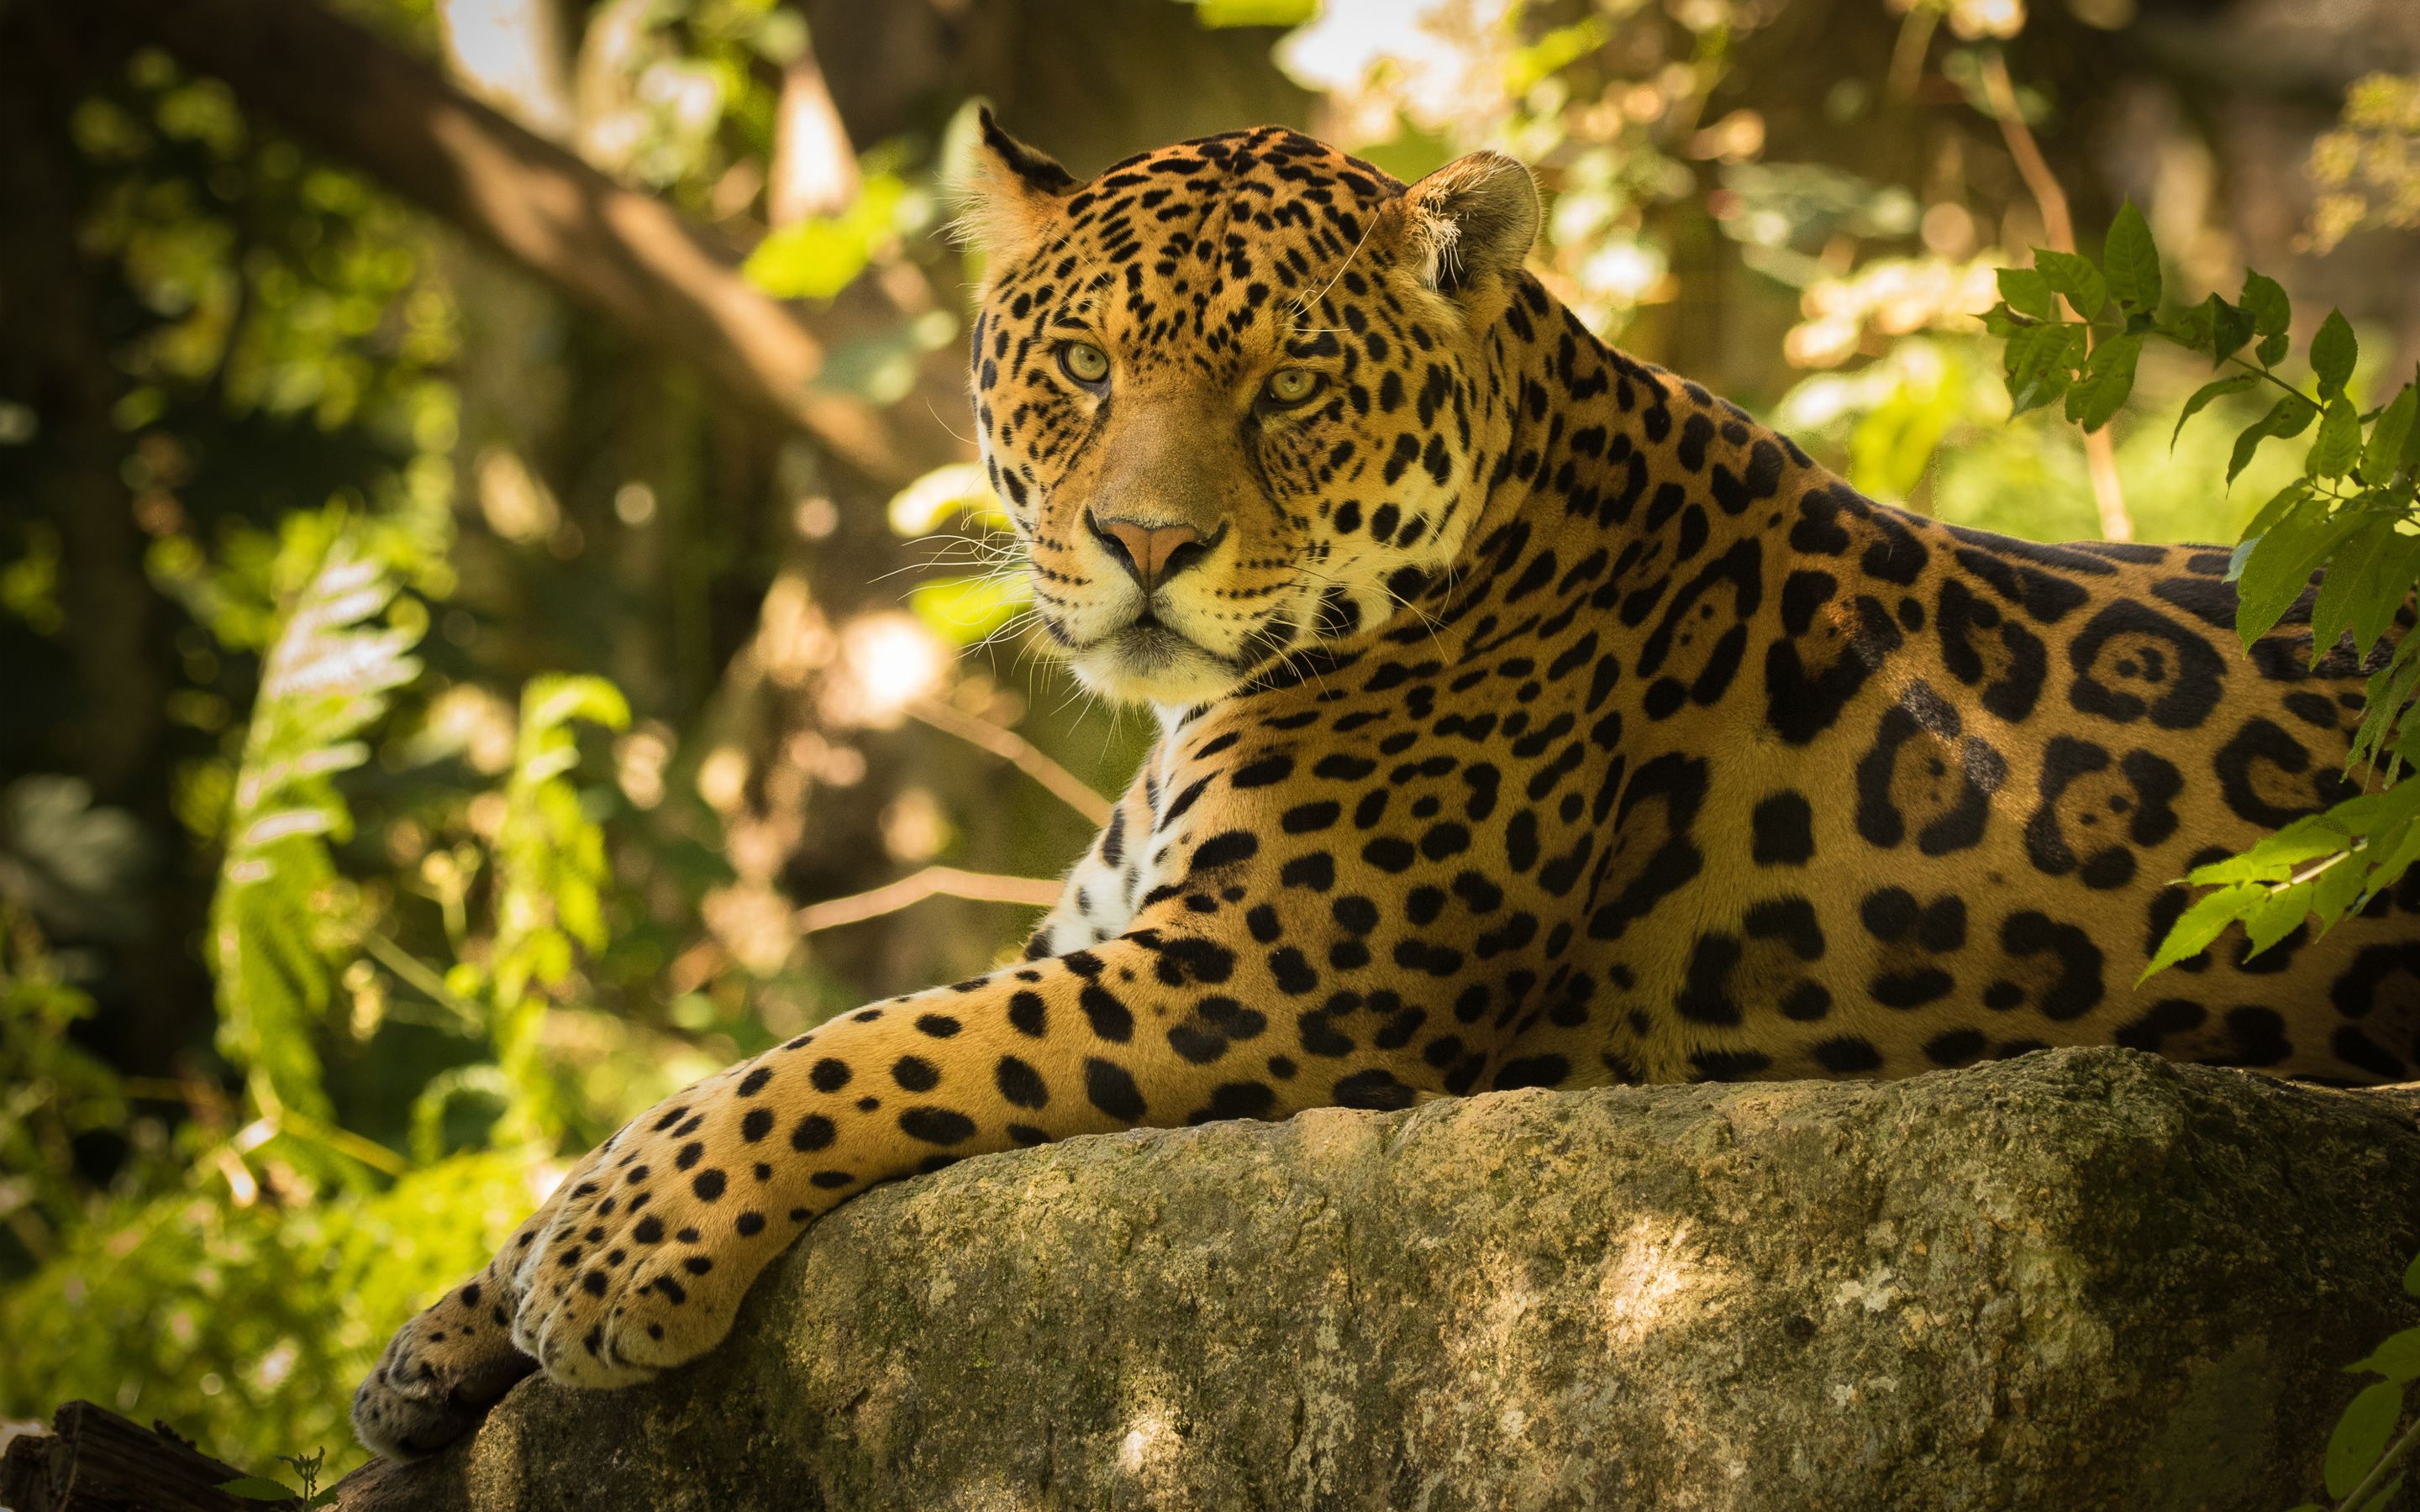 Jaguar 4K wallpaper for your desktop or mobile screen free